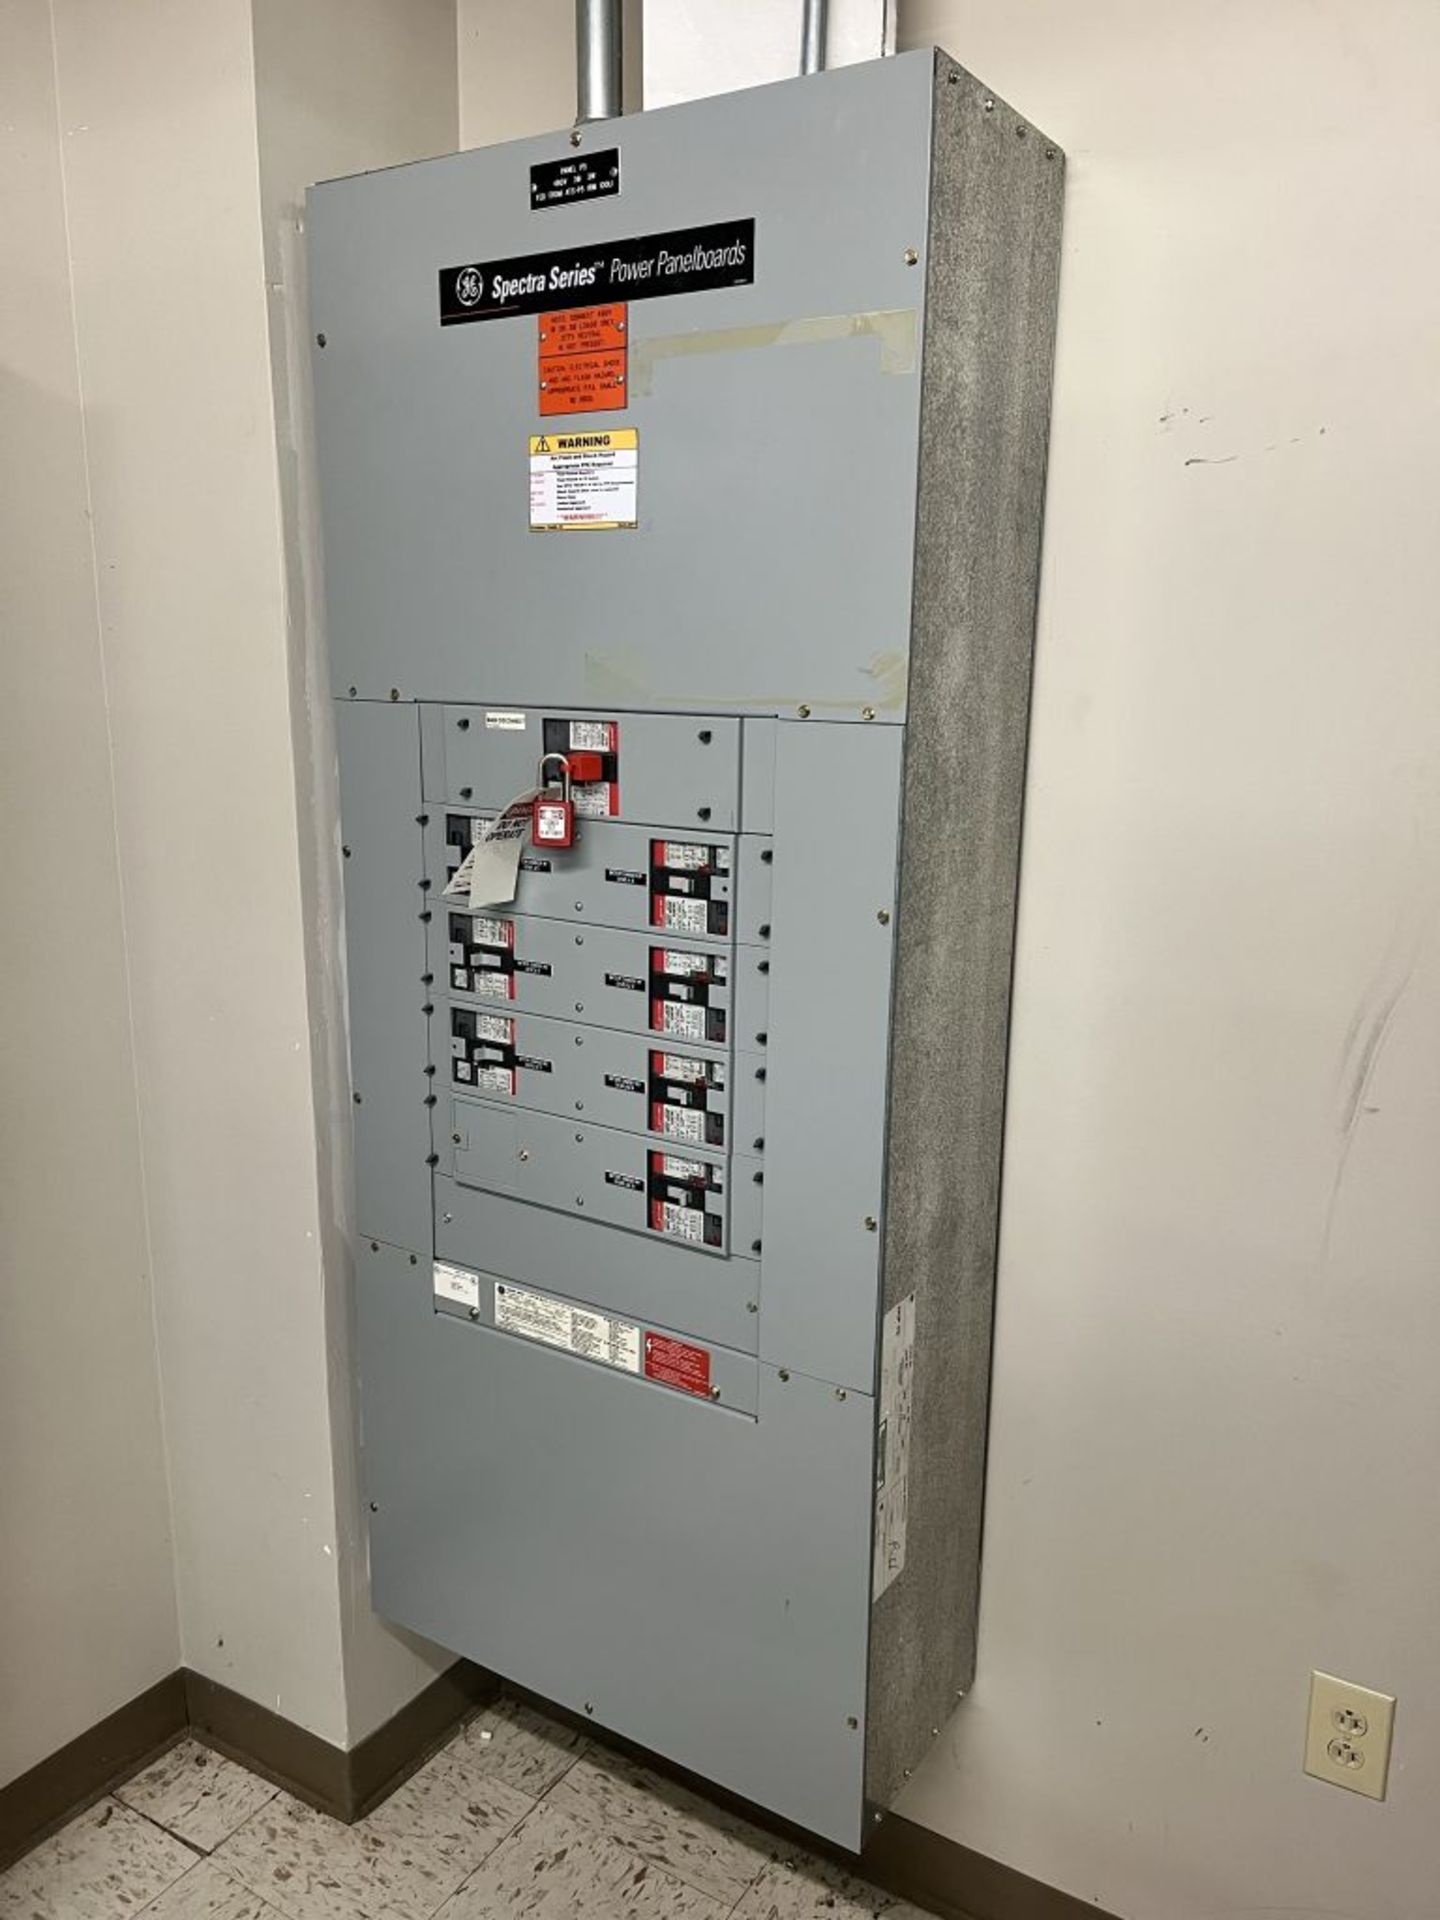 Spartanburg, SC - GE Spectra Series Power Panelboard - Image 2 of 6